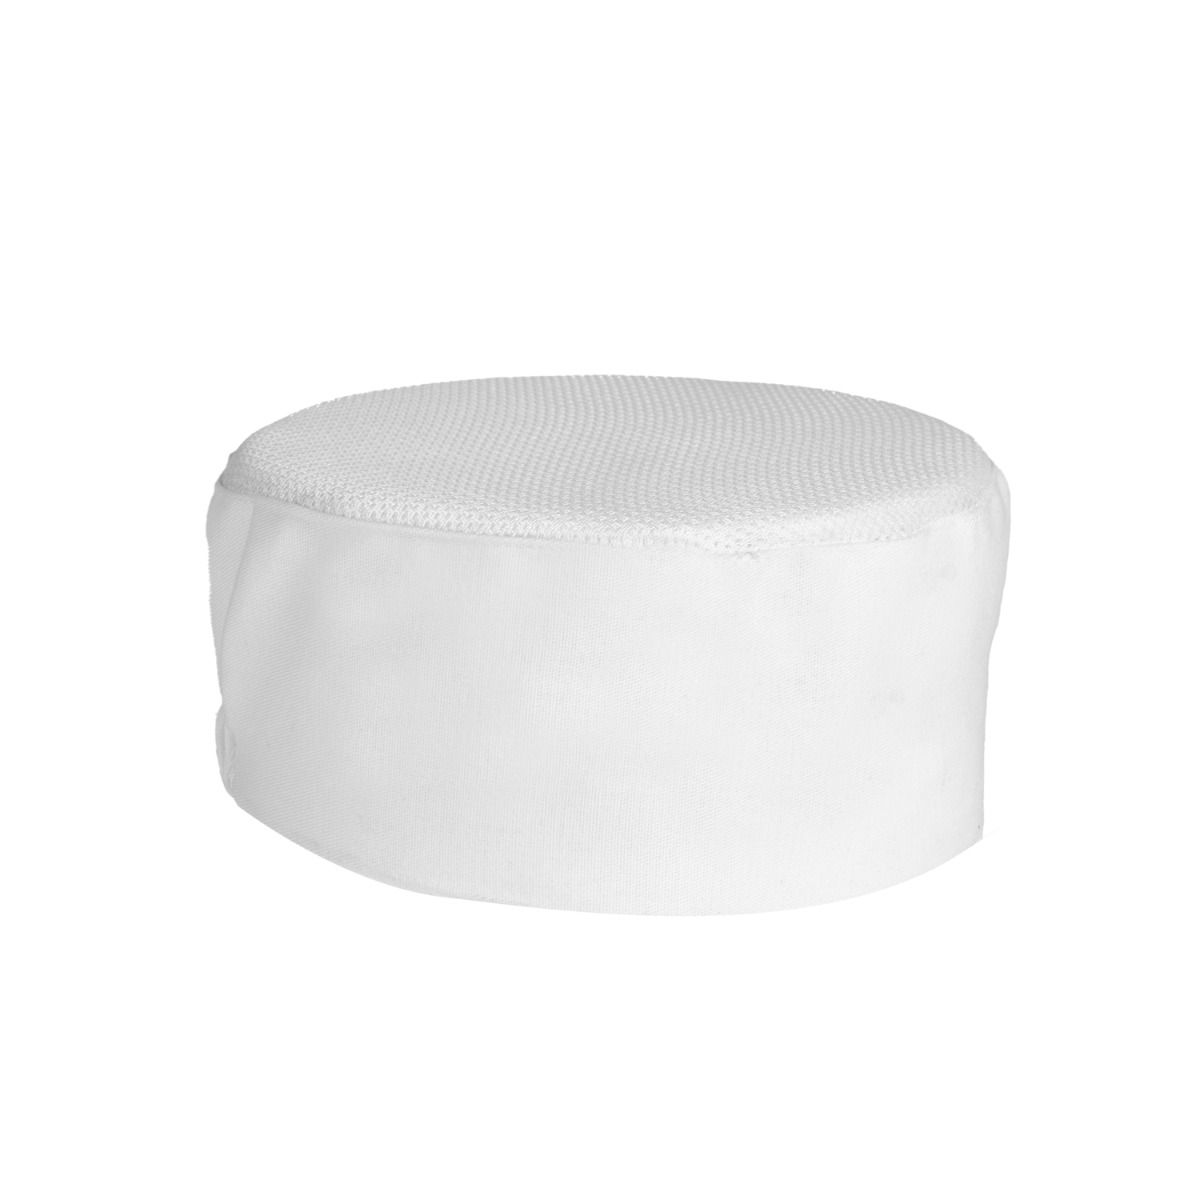 WHITE Pill Box Style Chef Hat Elastic Closure Regular Size 